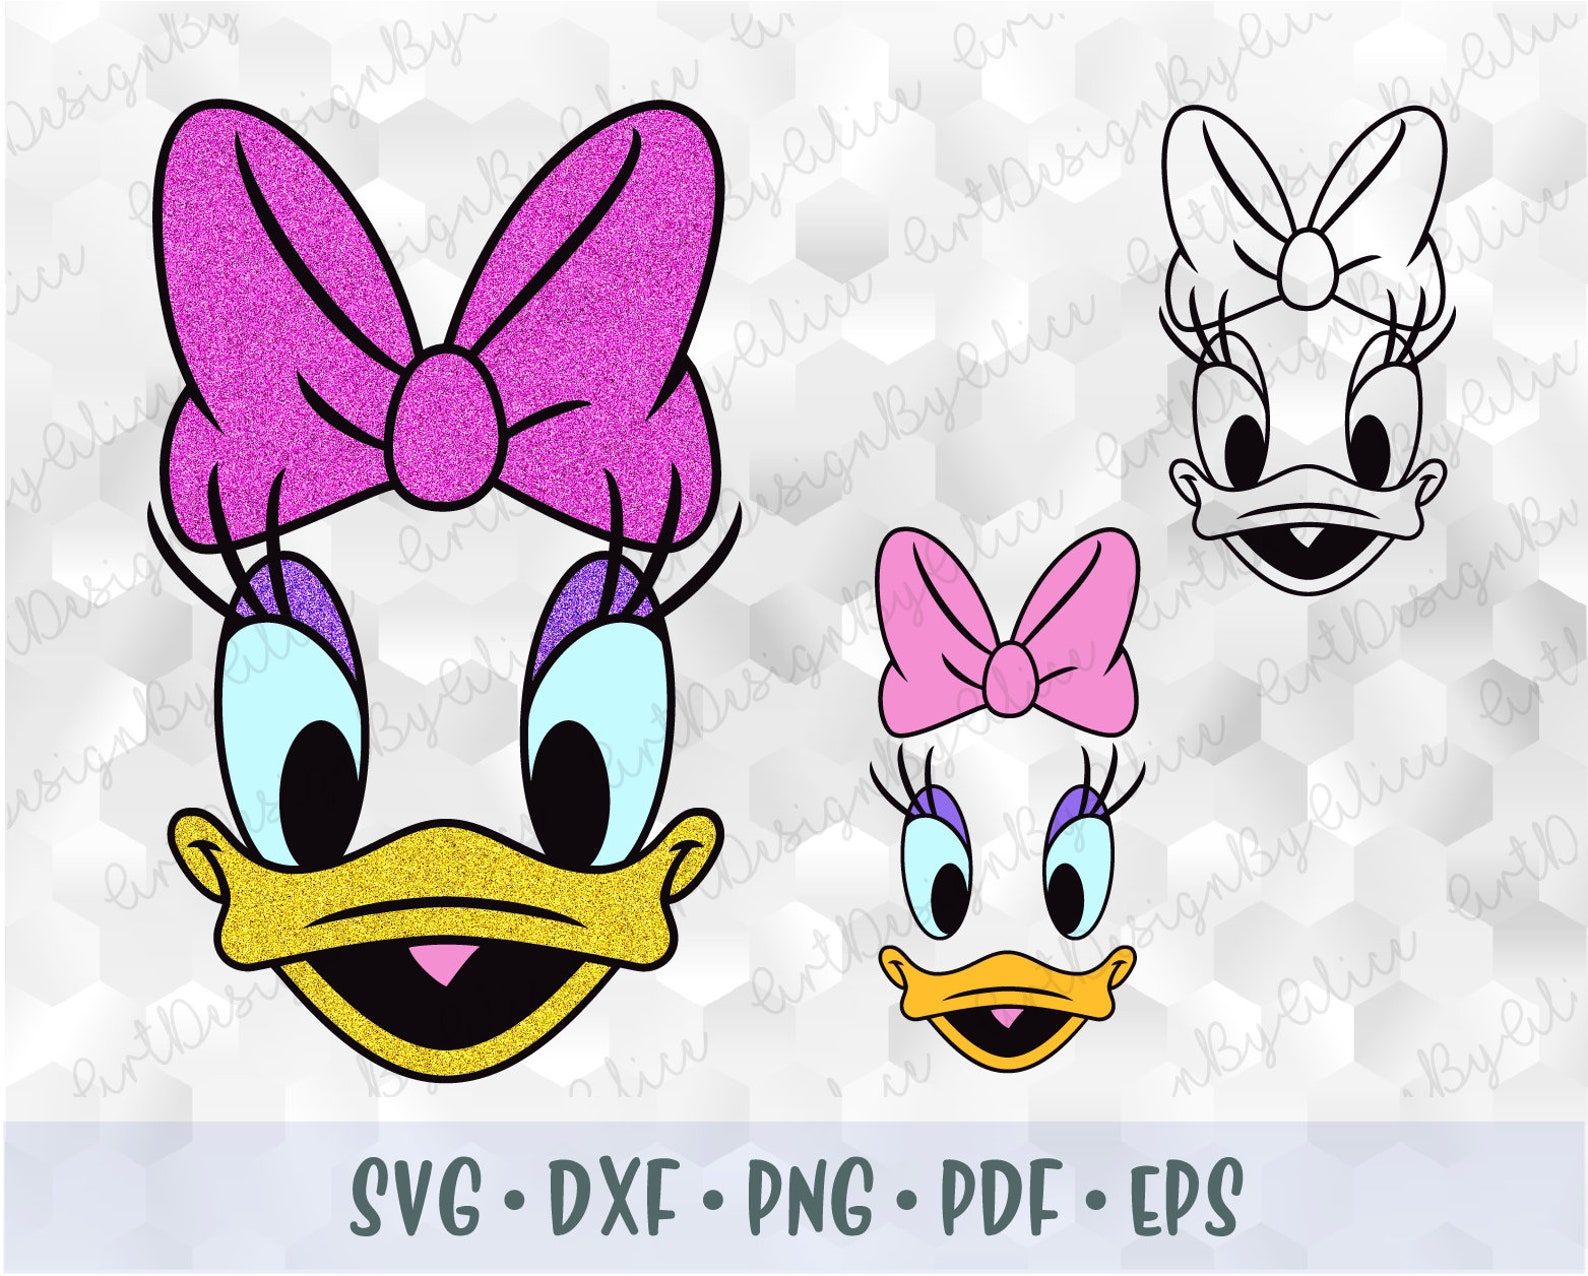 SVG Daisy Duck Head Face Eyers Beak Bow Mickey Minnie Friends | Etsy